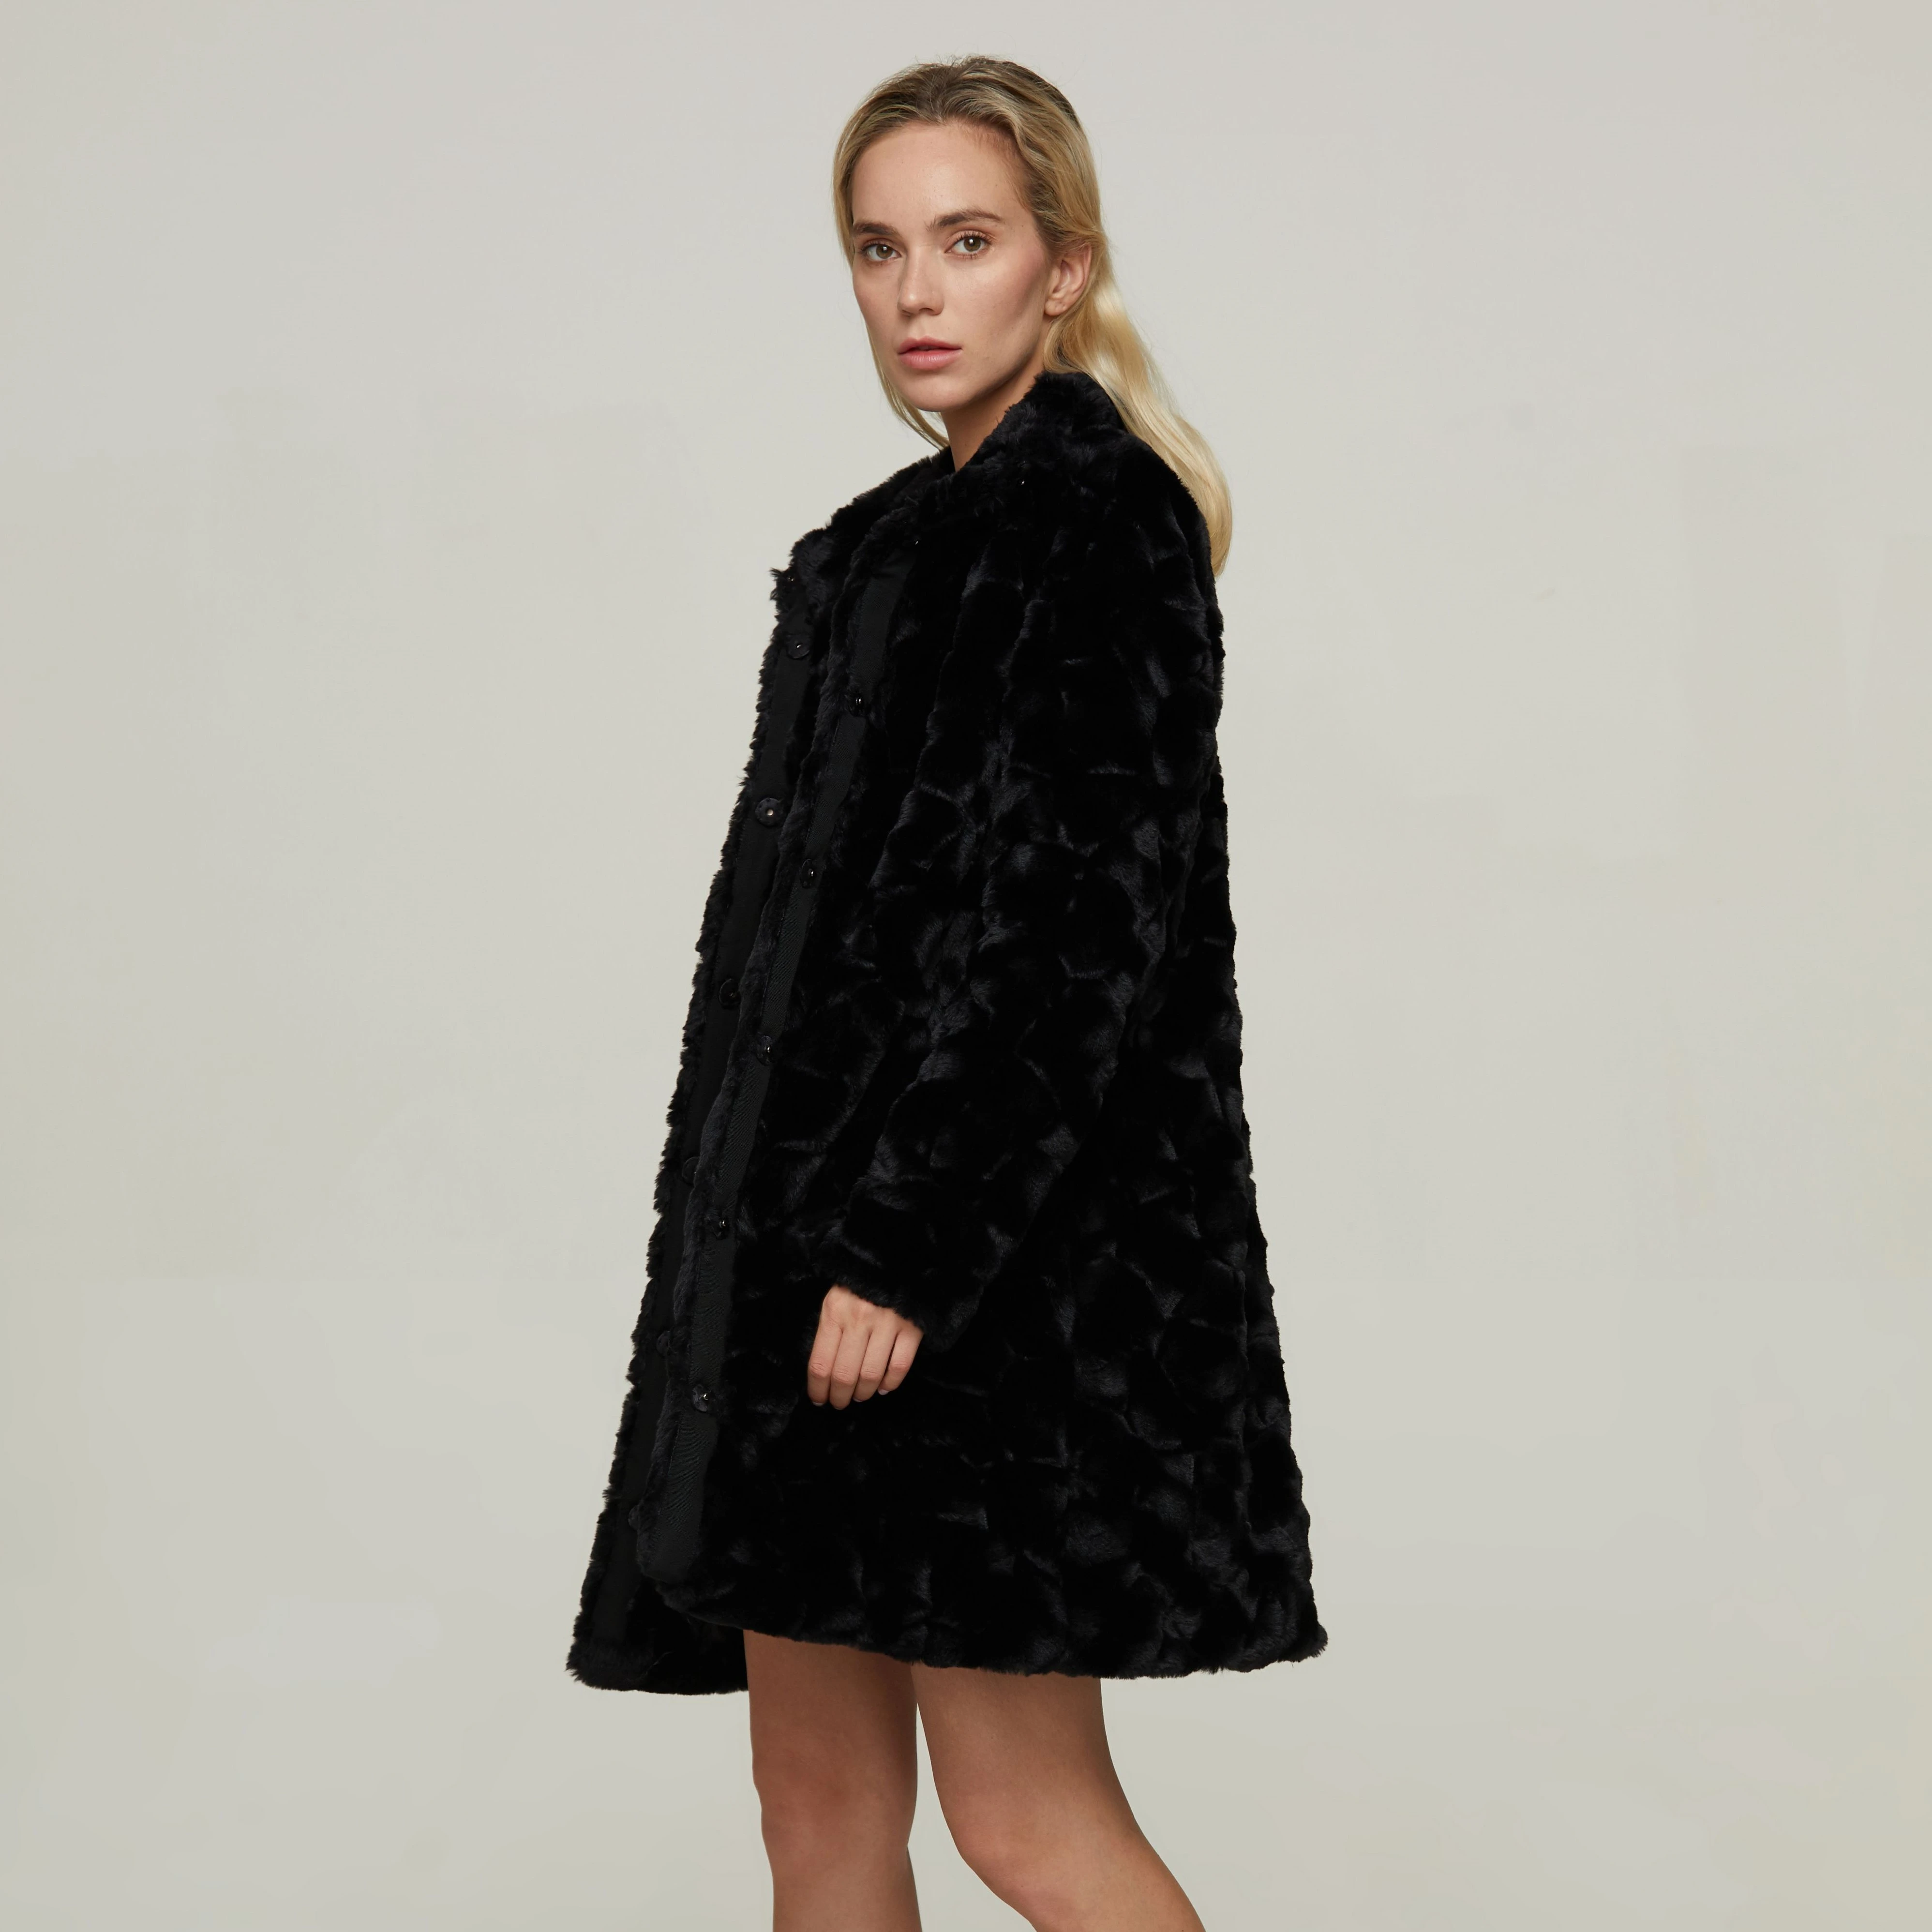 2020 New Arrivals Winter Faux Fur Long Coat Women&#x27;s vendor  Clothing   Black color women winter coat